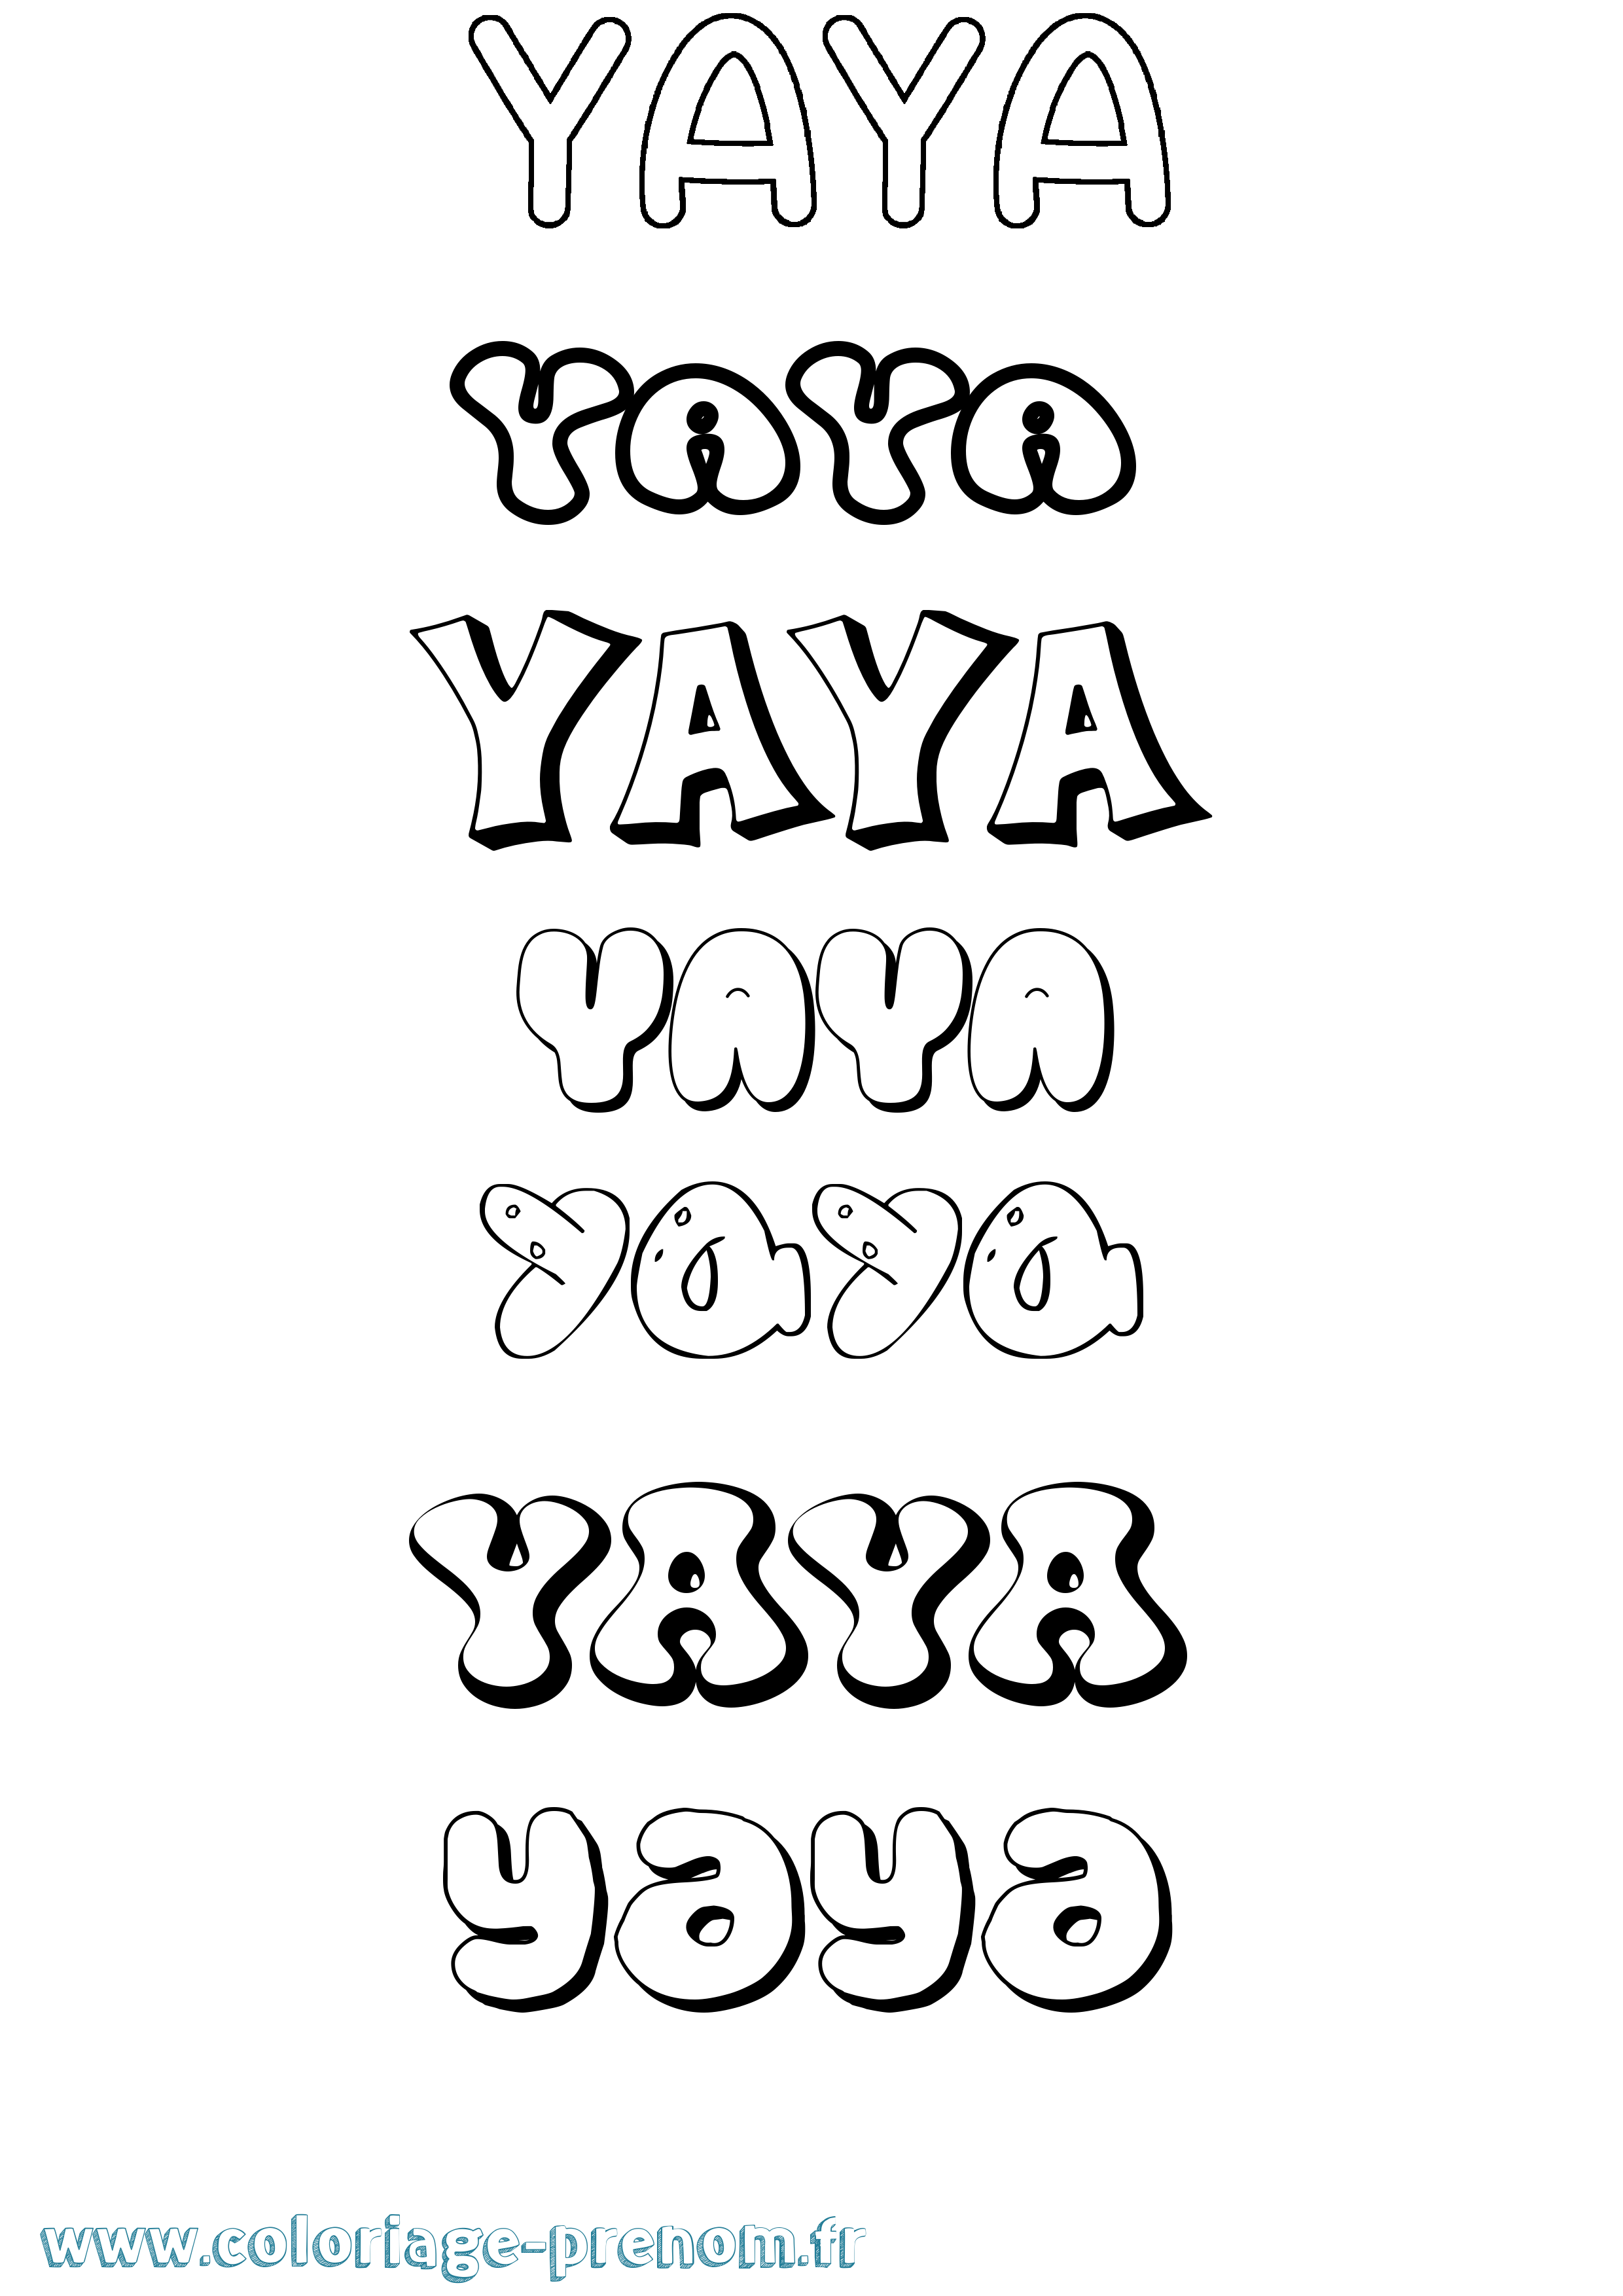 Coloriage prénom Yaya